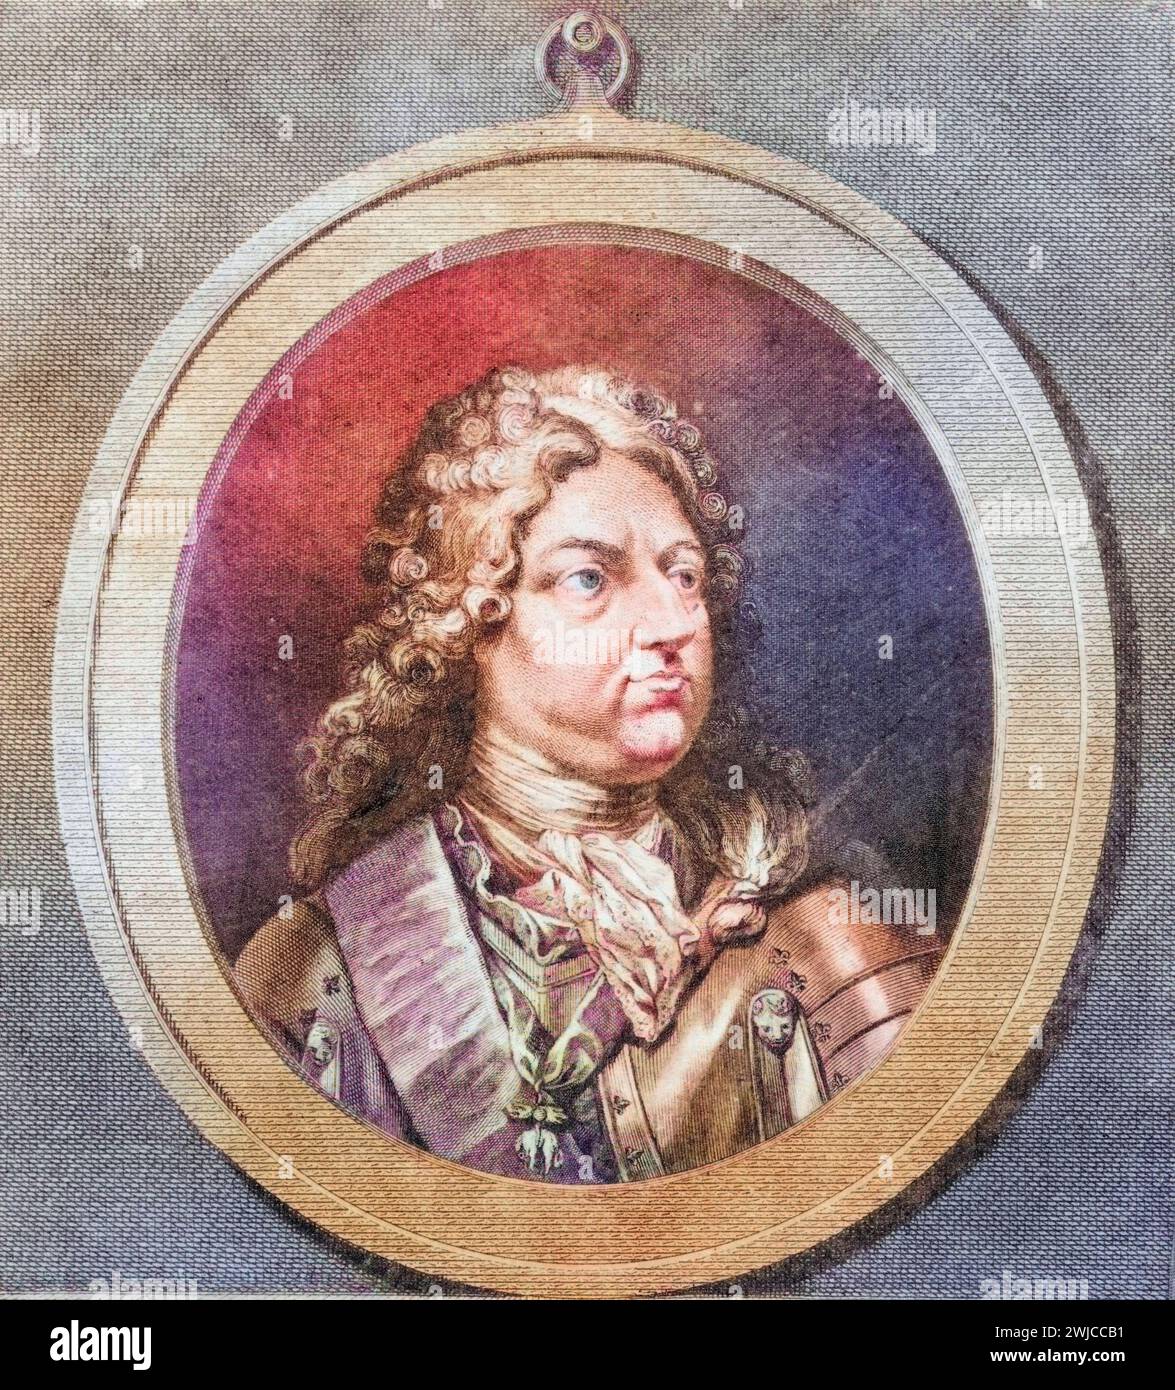 Duc d Orleans, Louis-Philippe Joseph, alias Philippe Egalite auch Duc de Chartres, 1725-1785. Regent von Frankreich für Ludwig XV., Historisch, digita Stock Photo